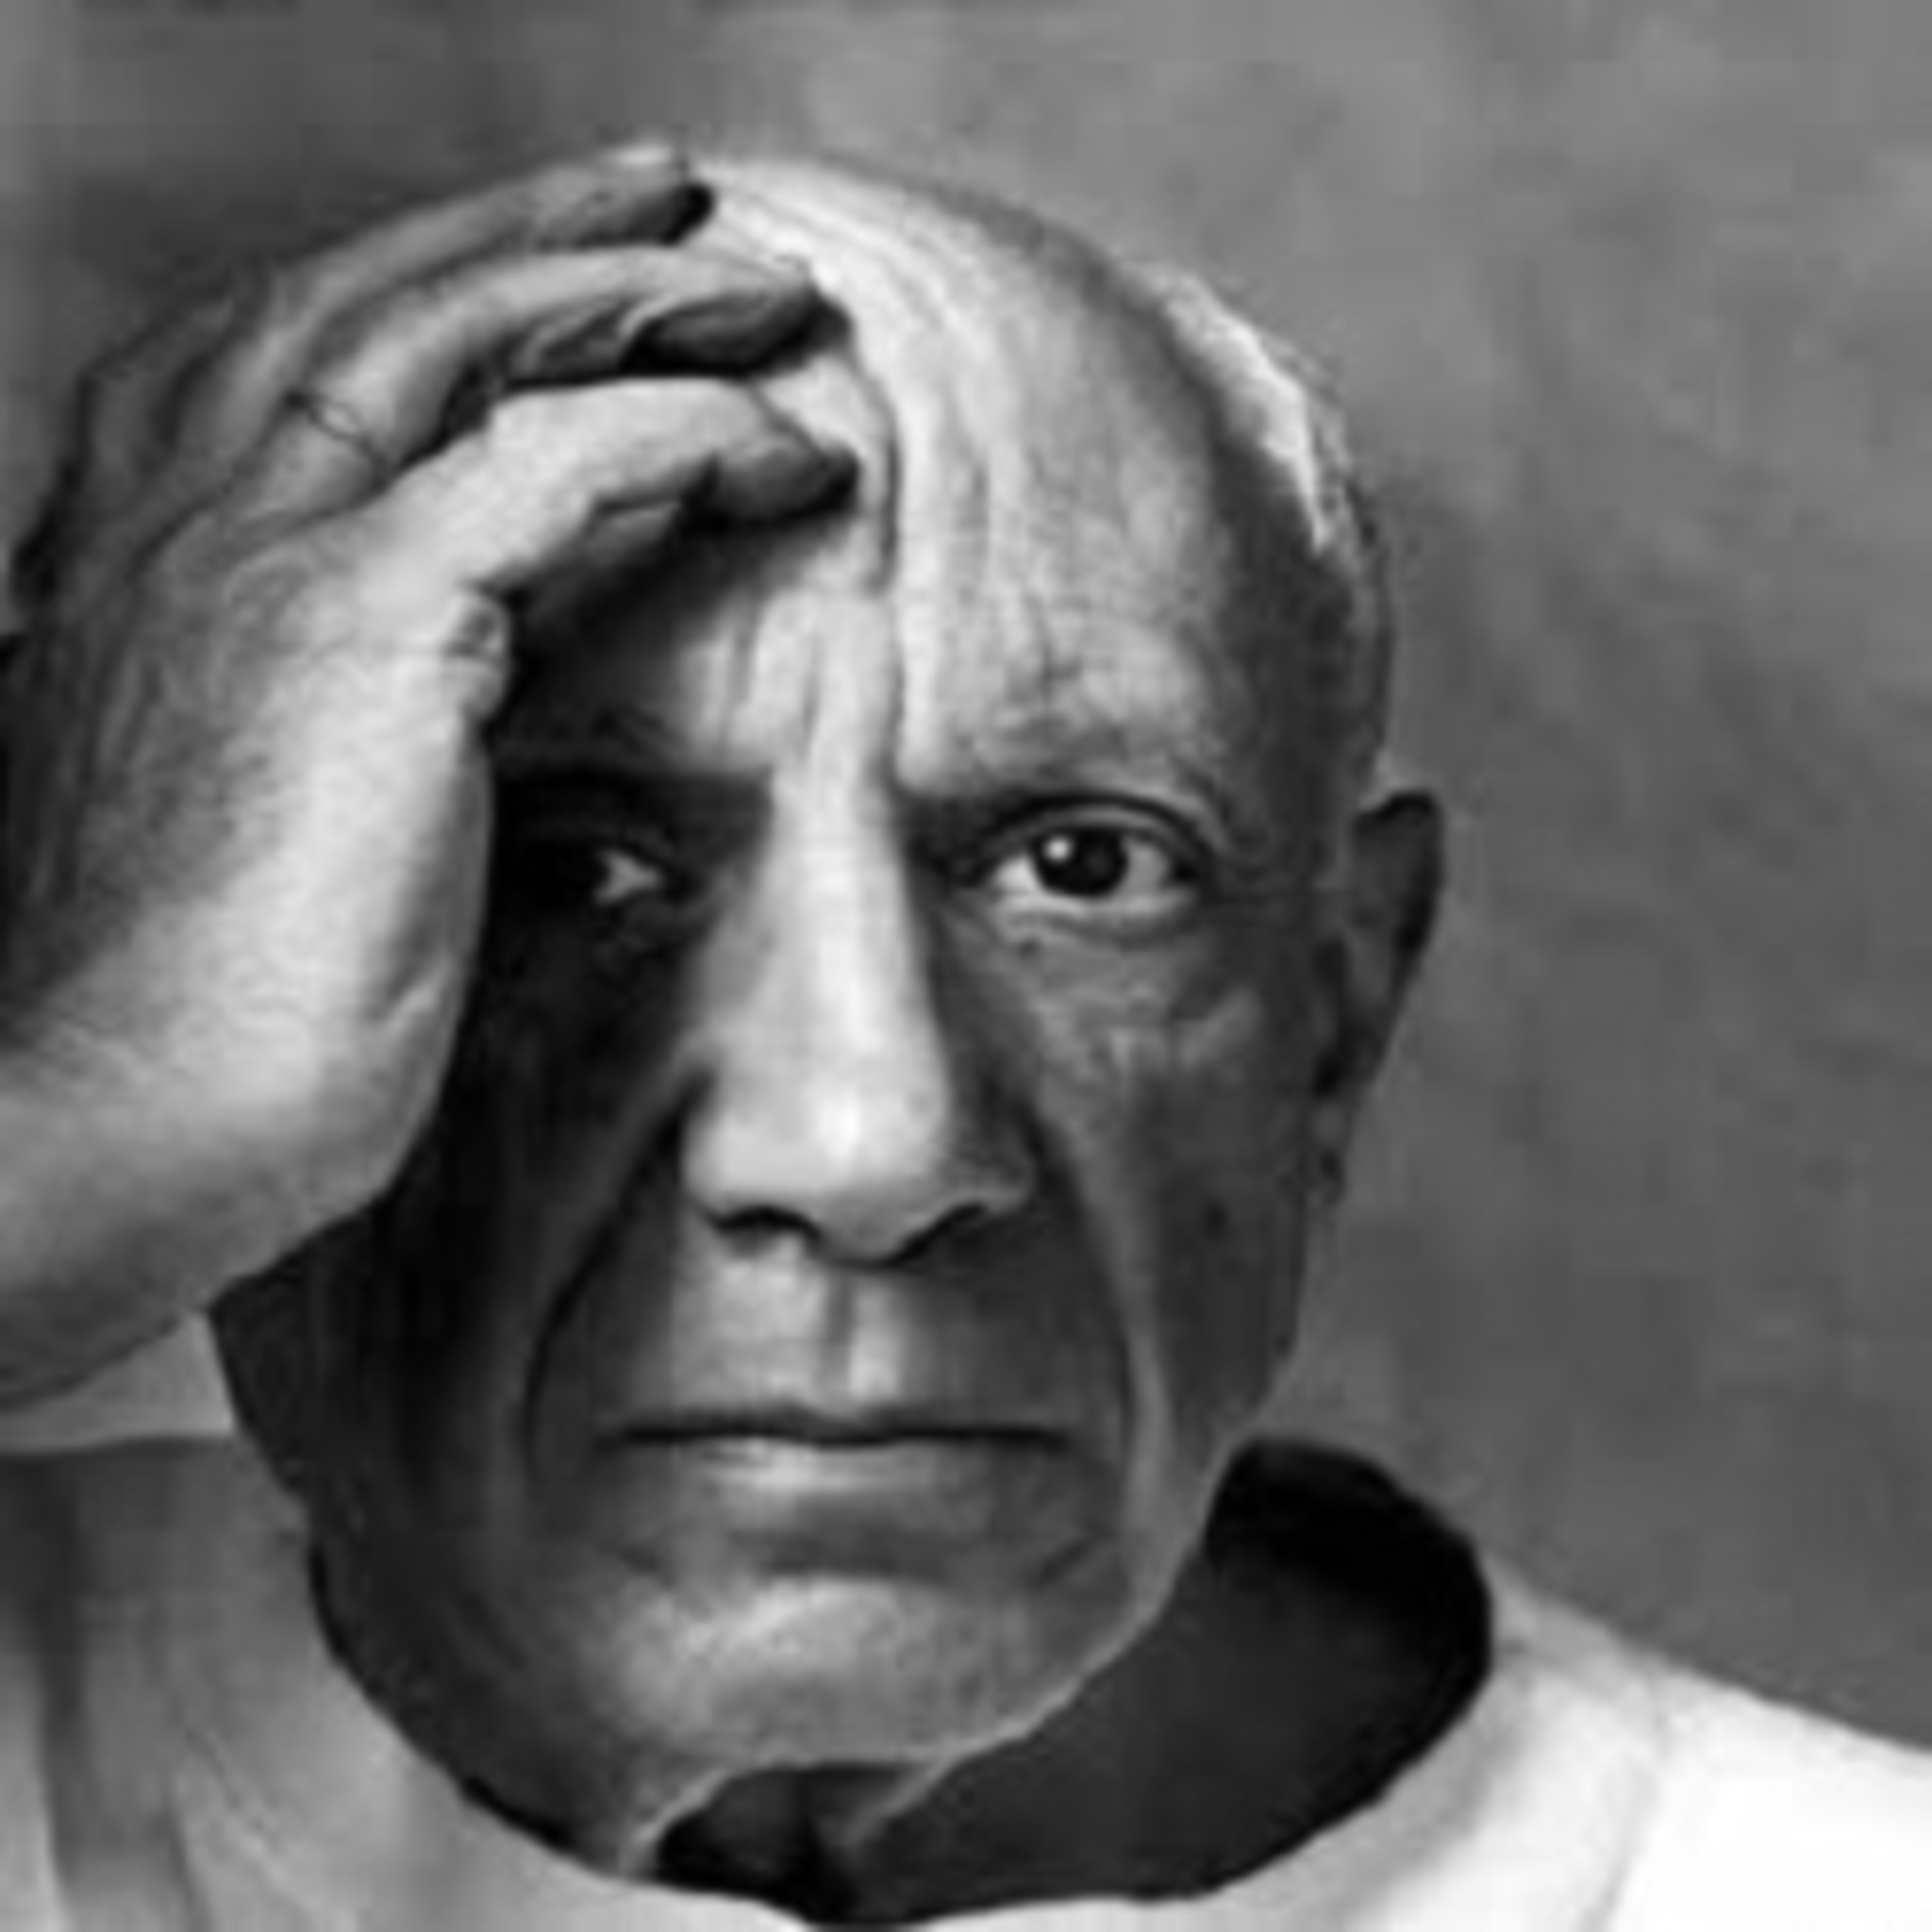 The exhibition Pablo Picasso. Temptation